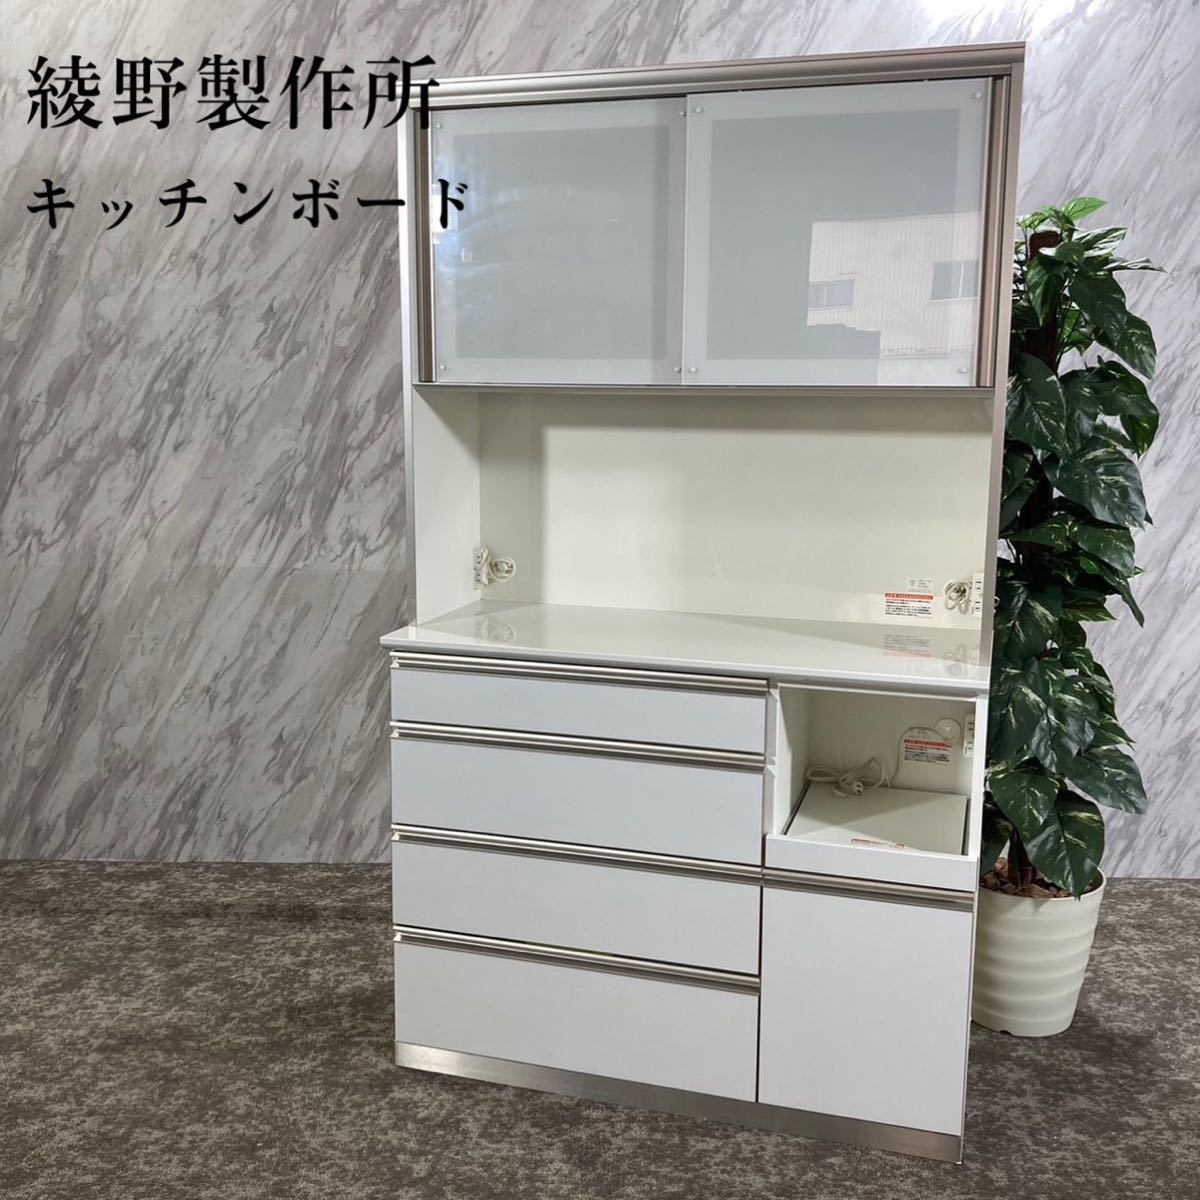 AYANO 綾野製作所 キッチンボード カップボード 食器棚 キッチン収納 G351